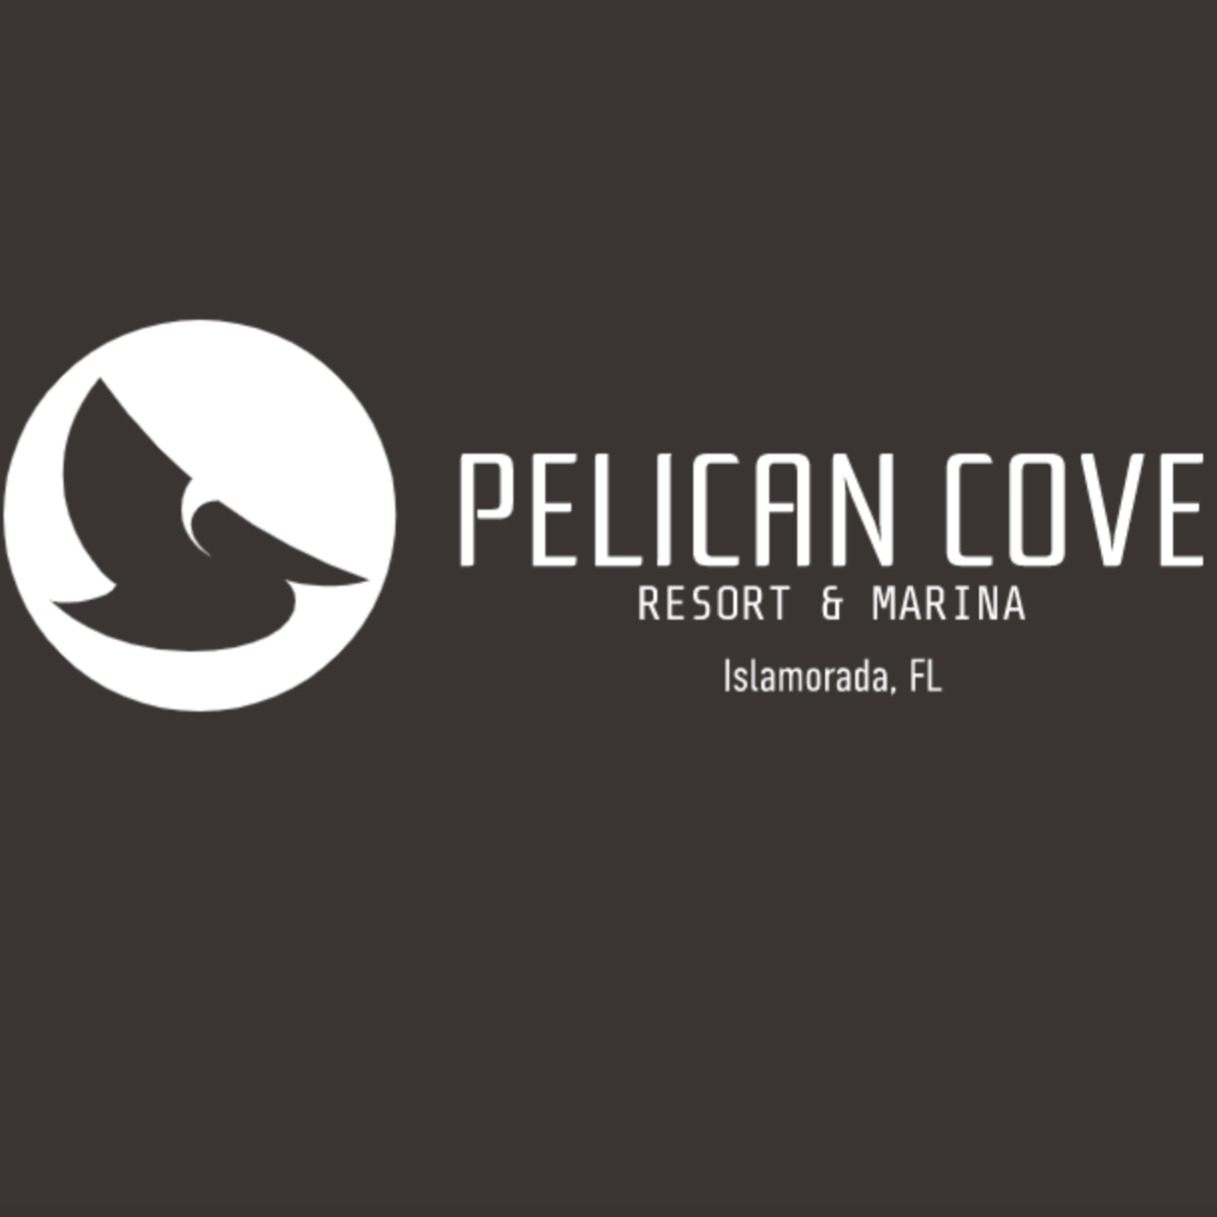 Pelican Cove Resort & Marina Logo